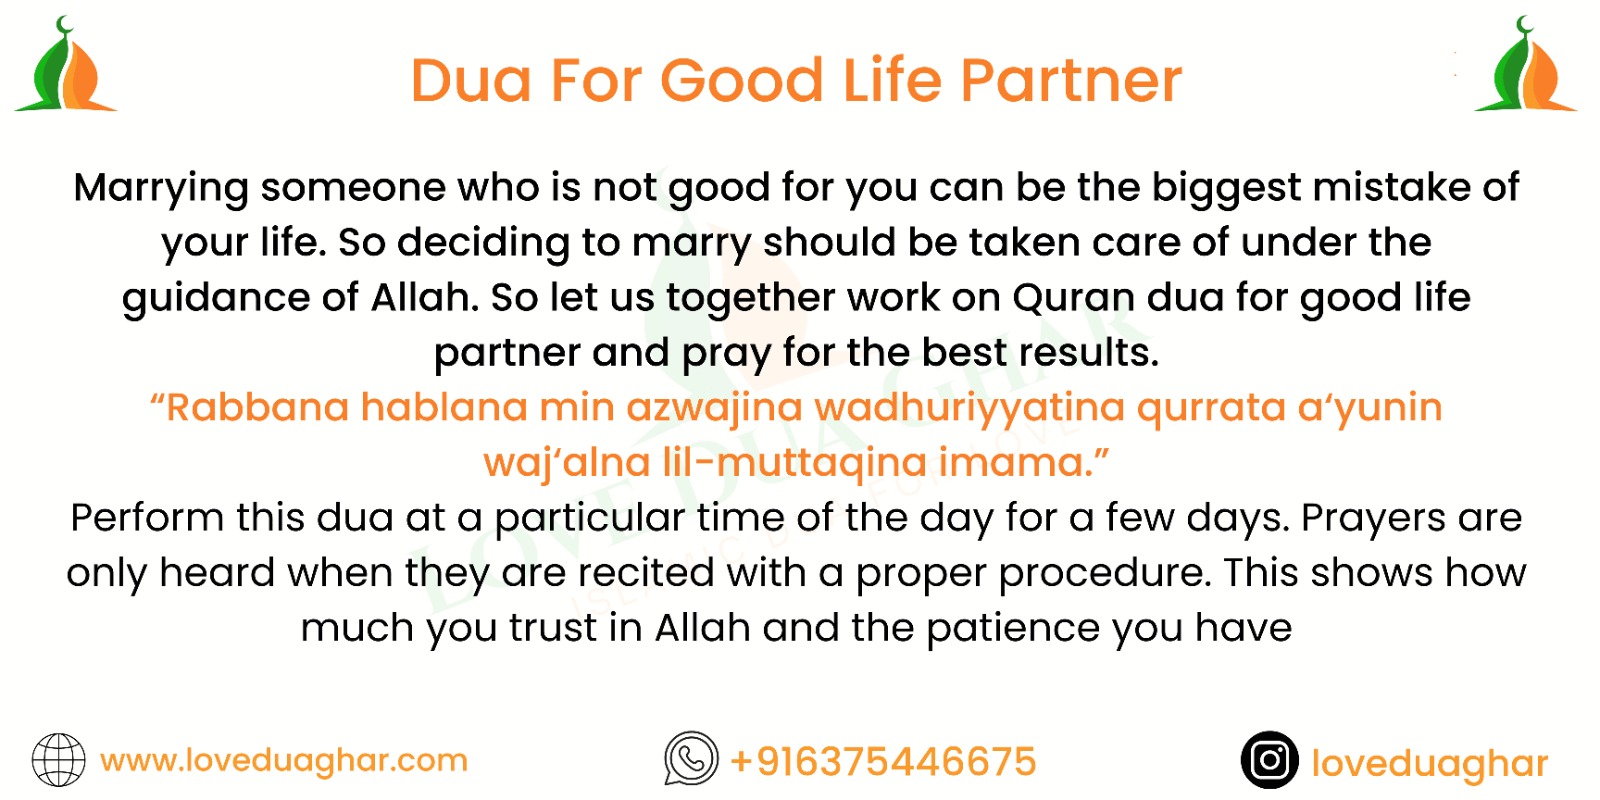 Dua For Good Life Partner